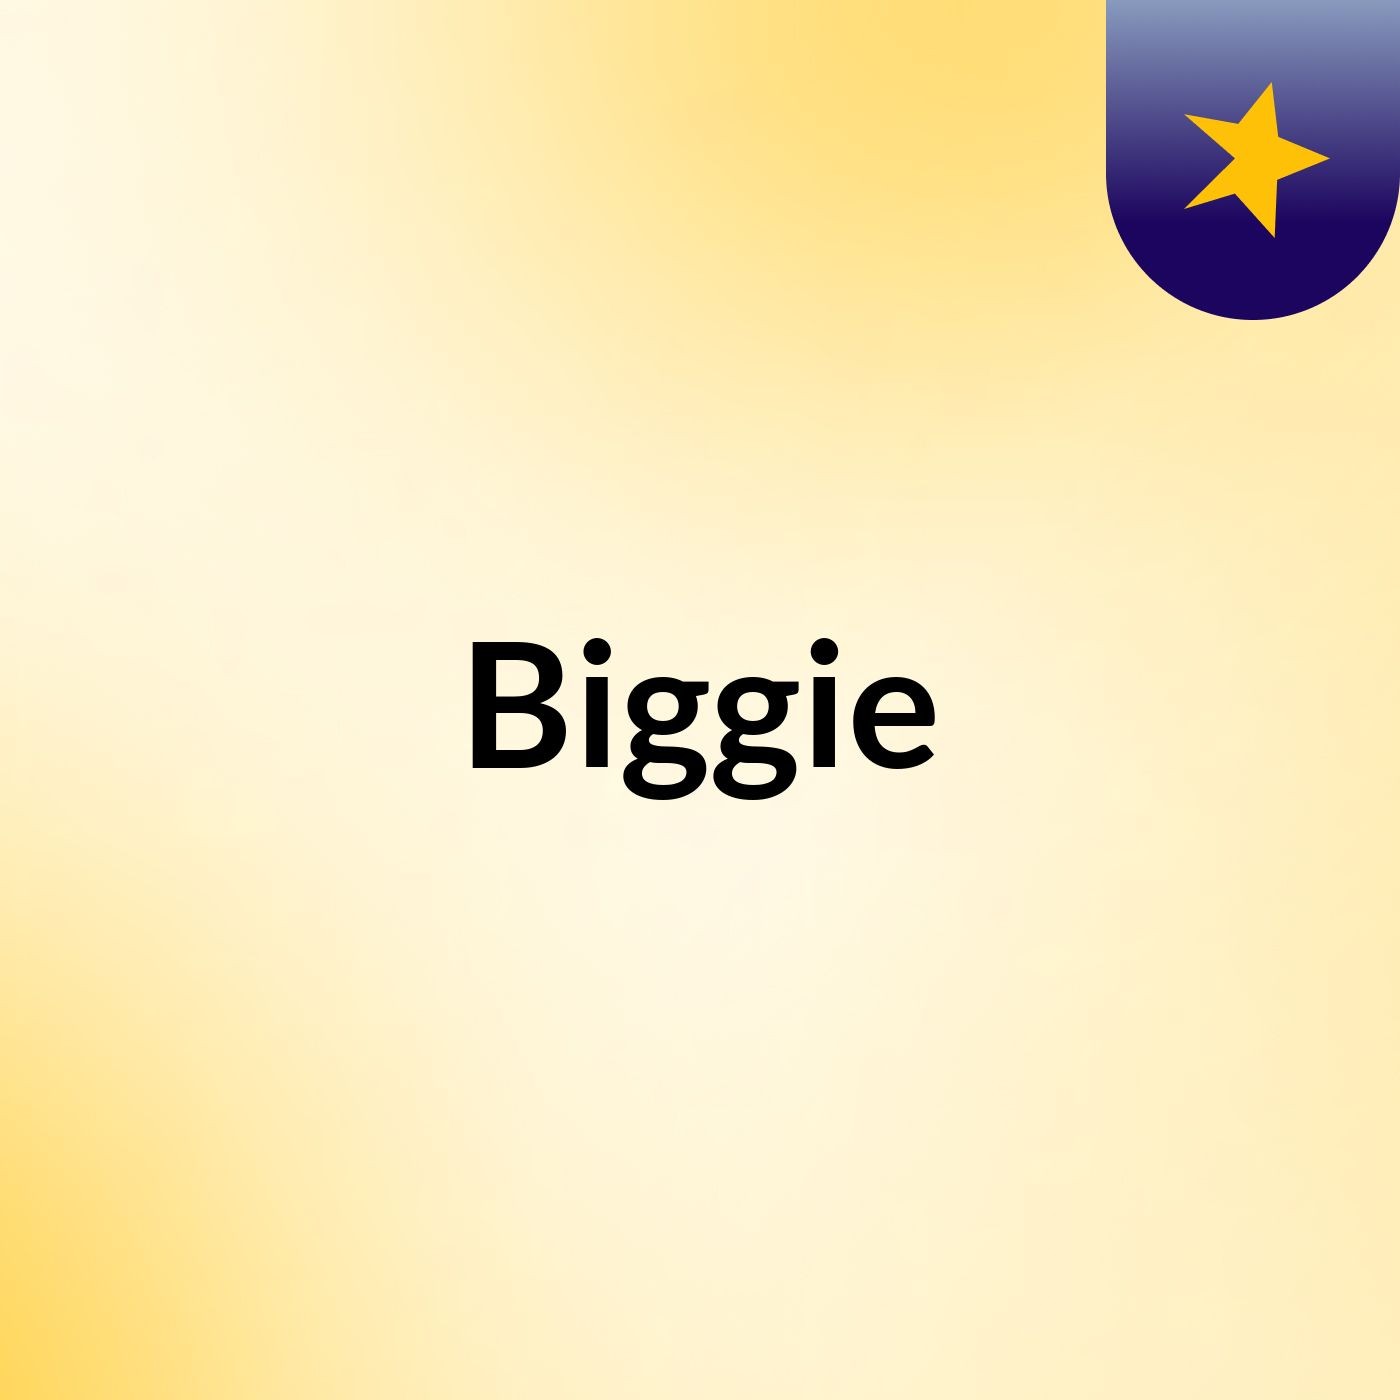 Episode 4 - Biggie